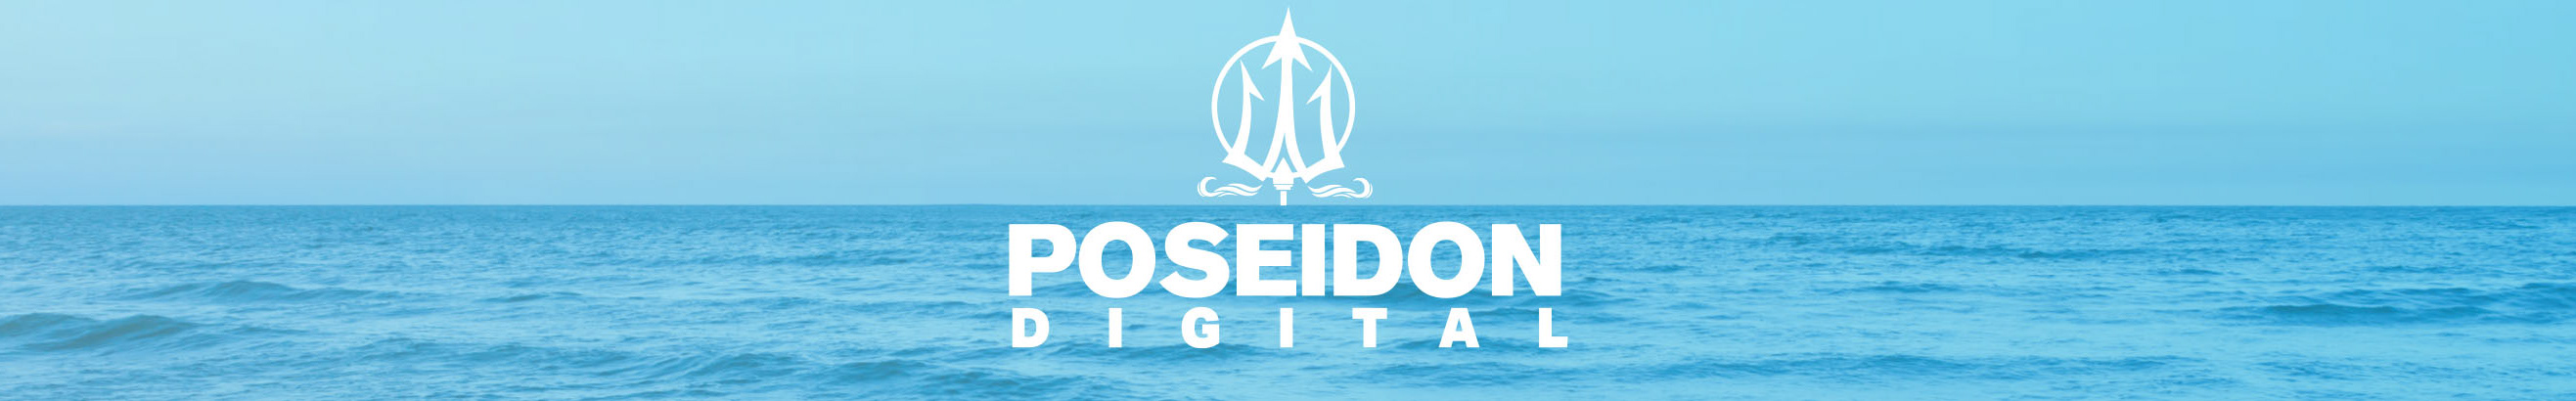 Agência Poseidon Digital's profile banner